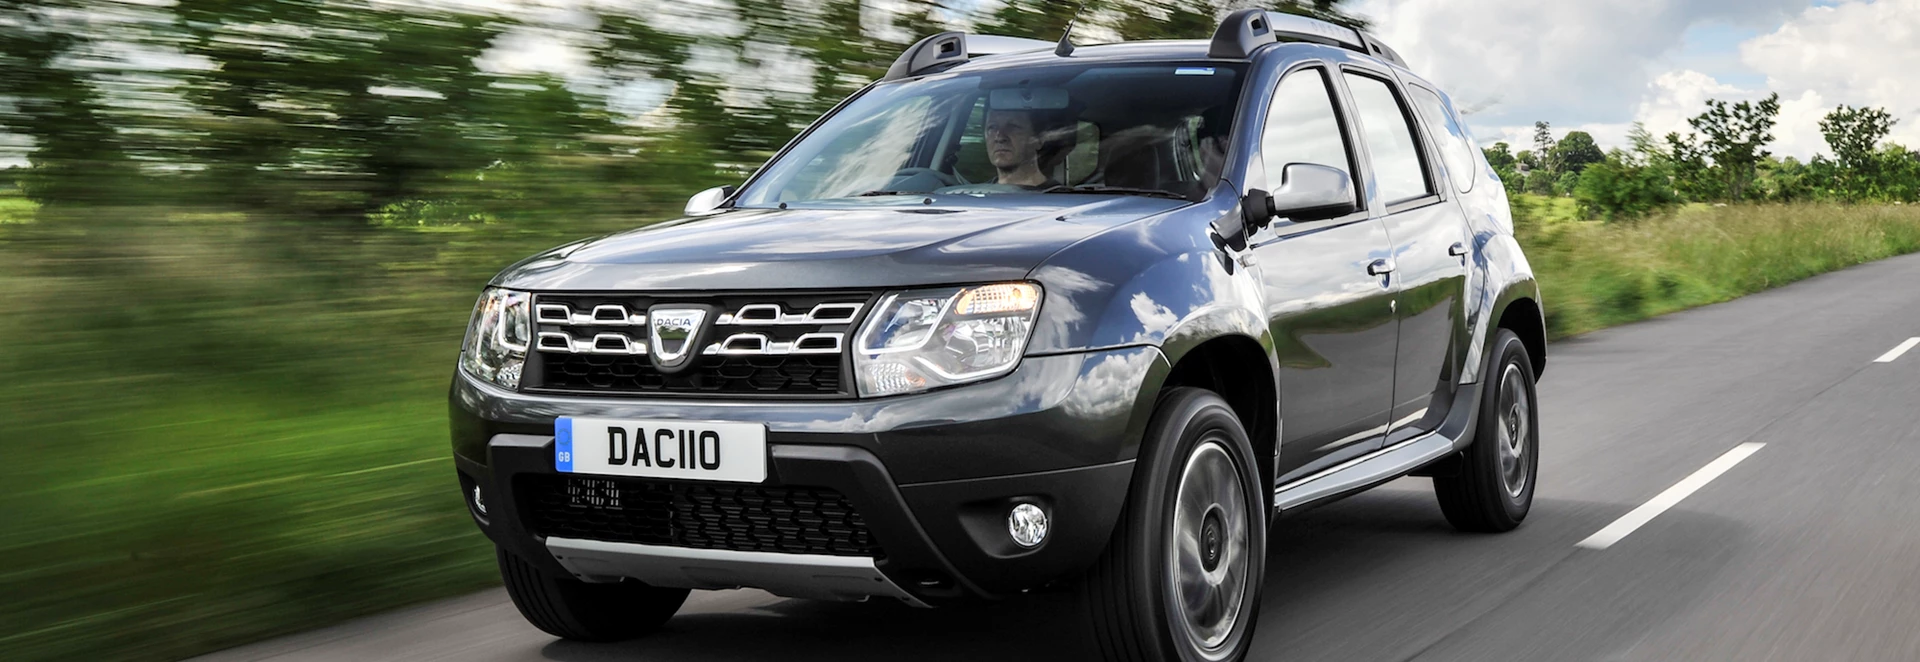 Dacia dominates affordable car list for 2018